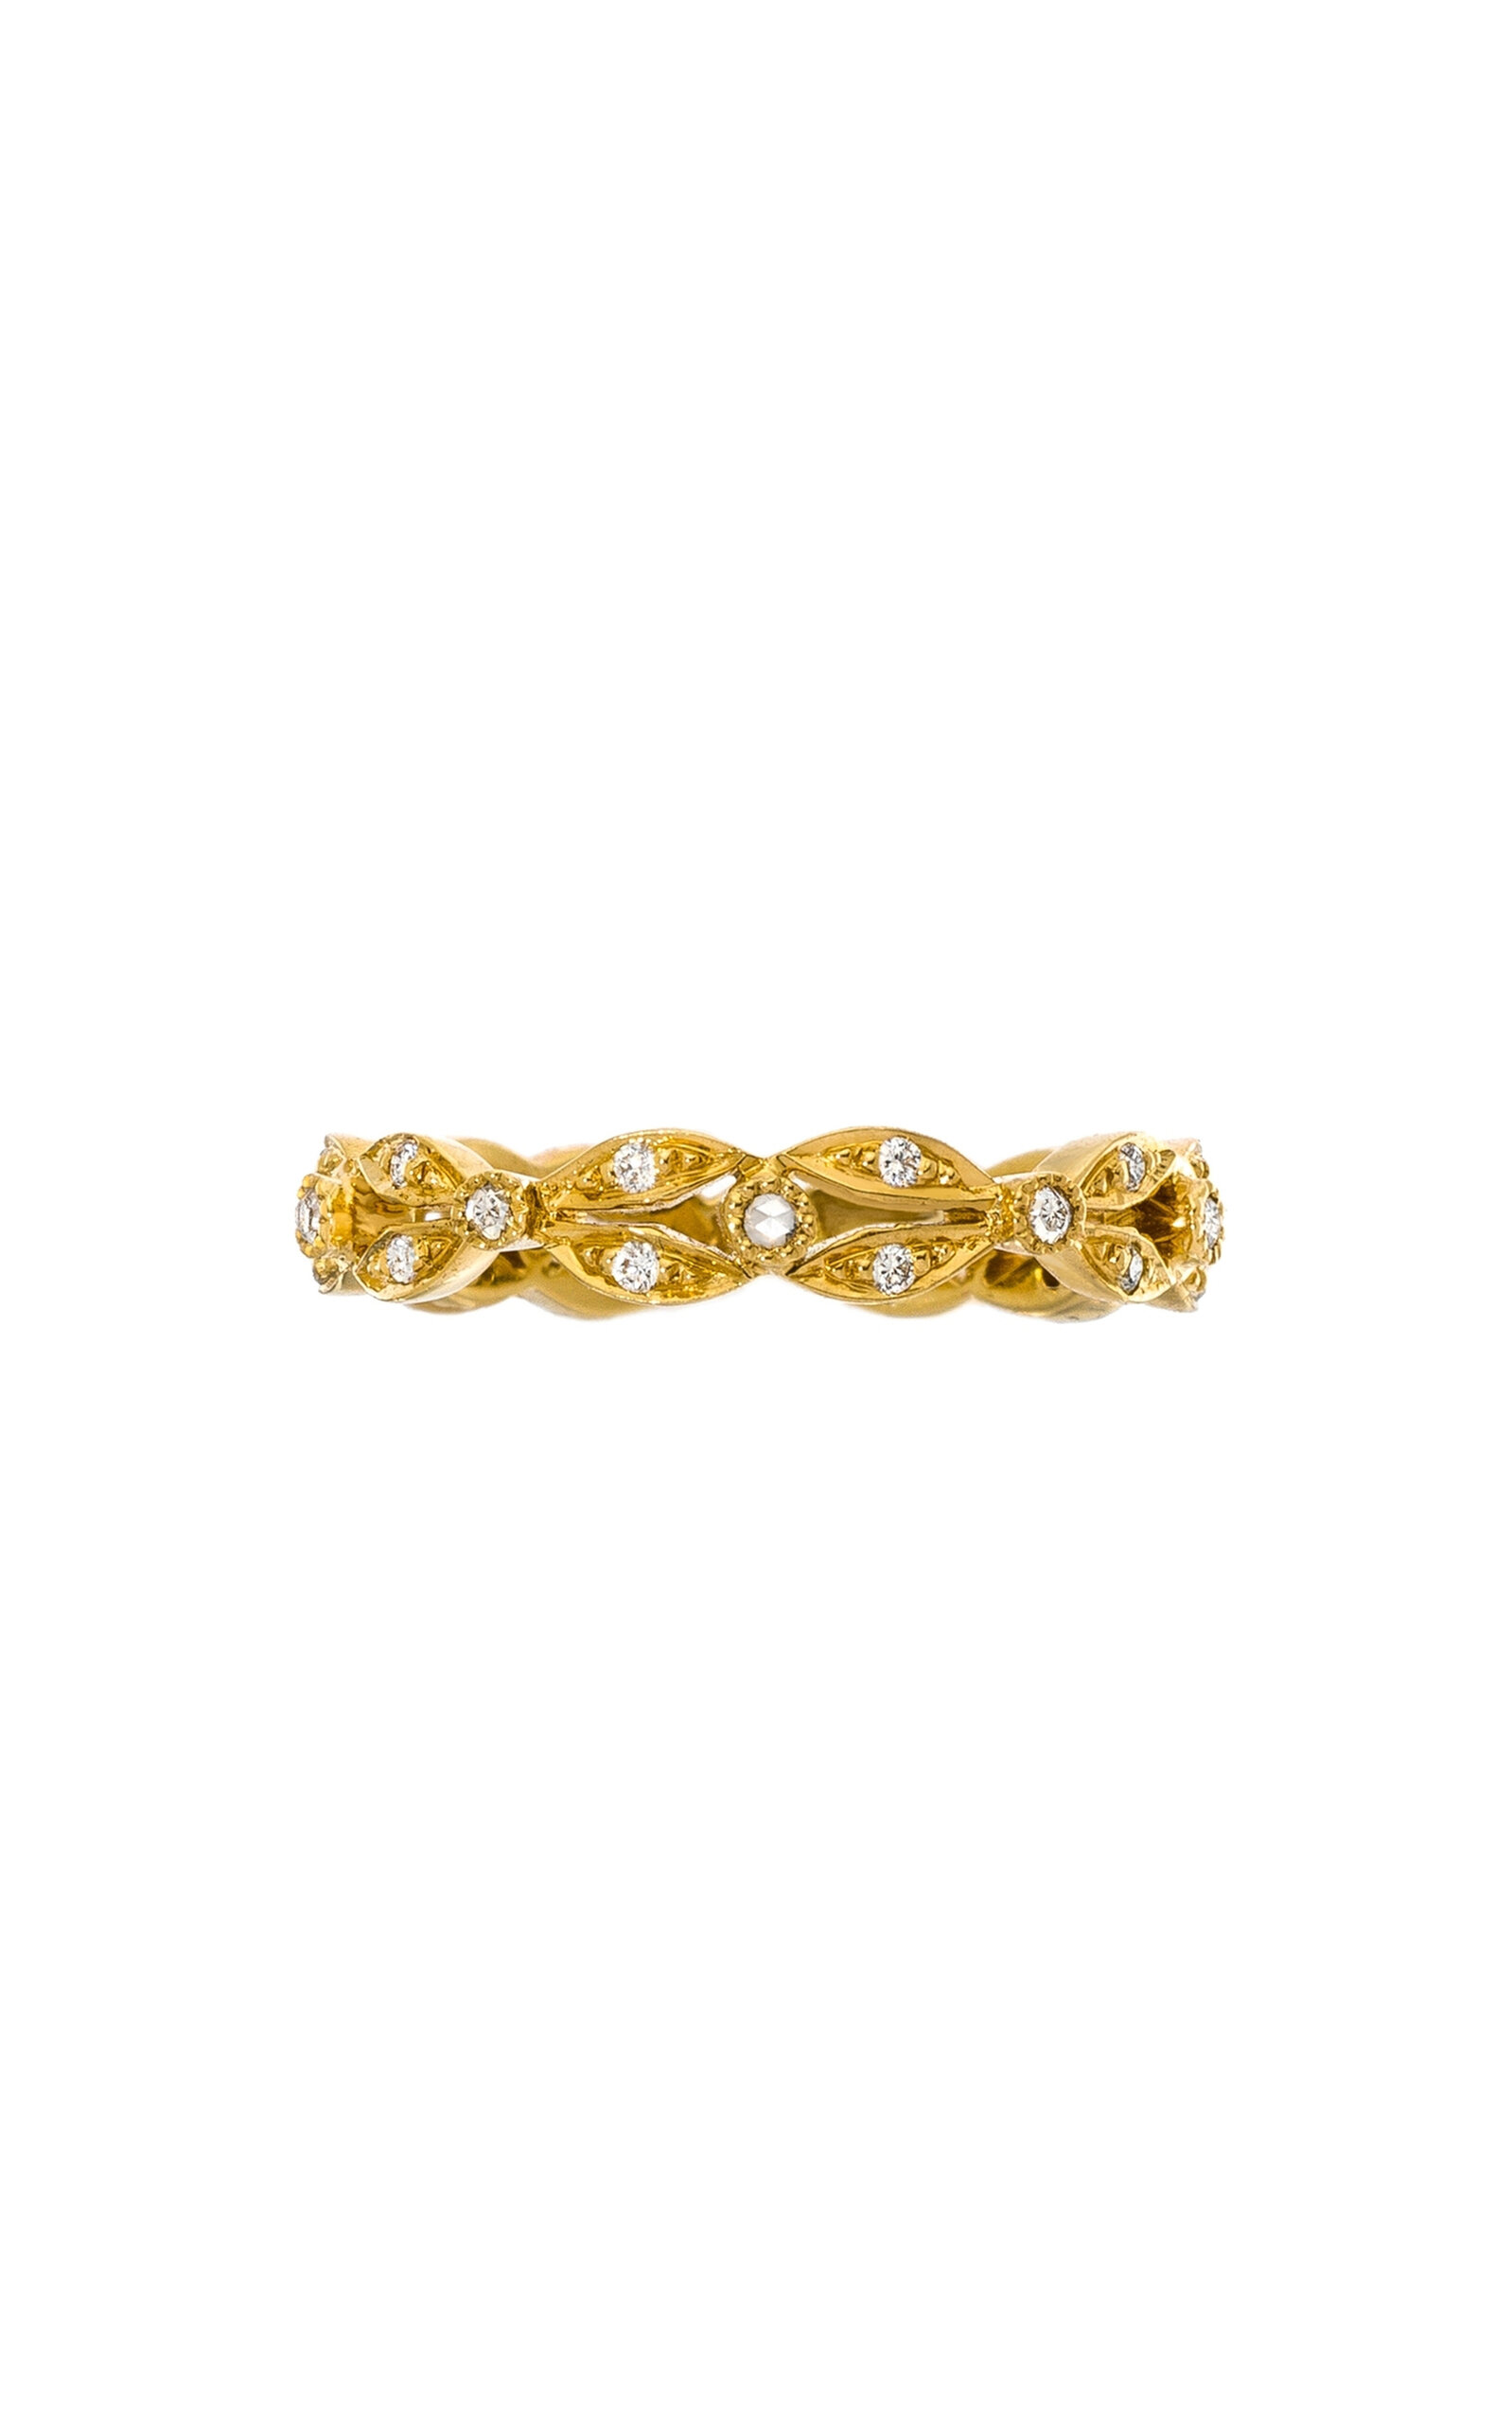 The Garland 18K Yellow Gold Diamond Ring